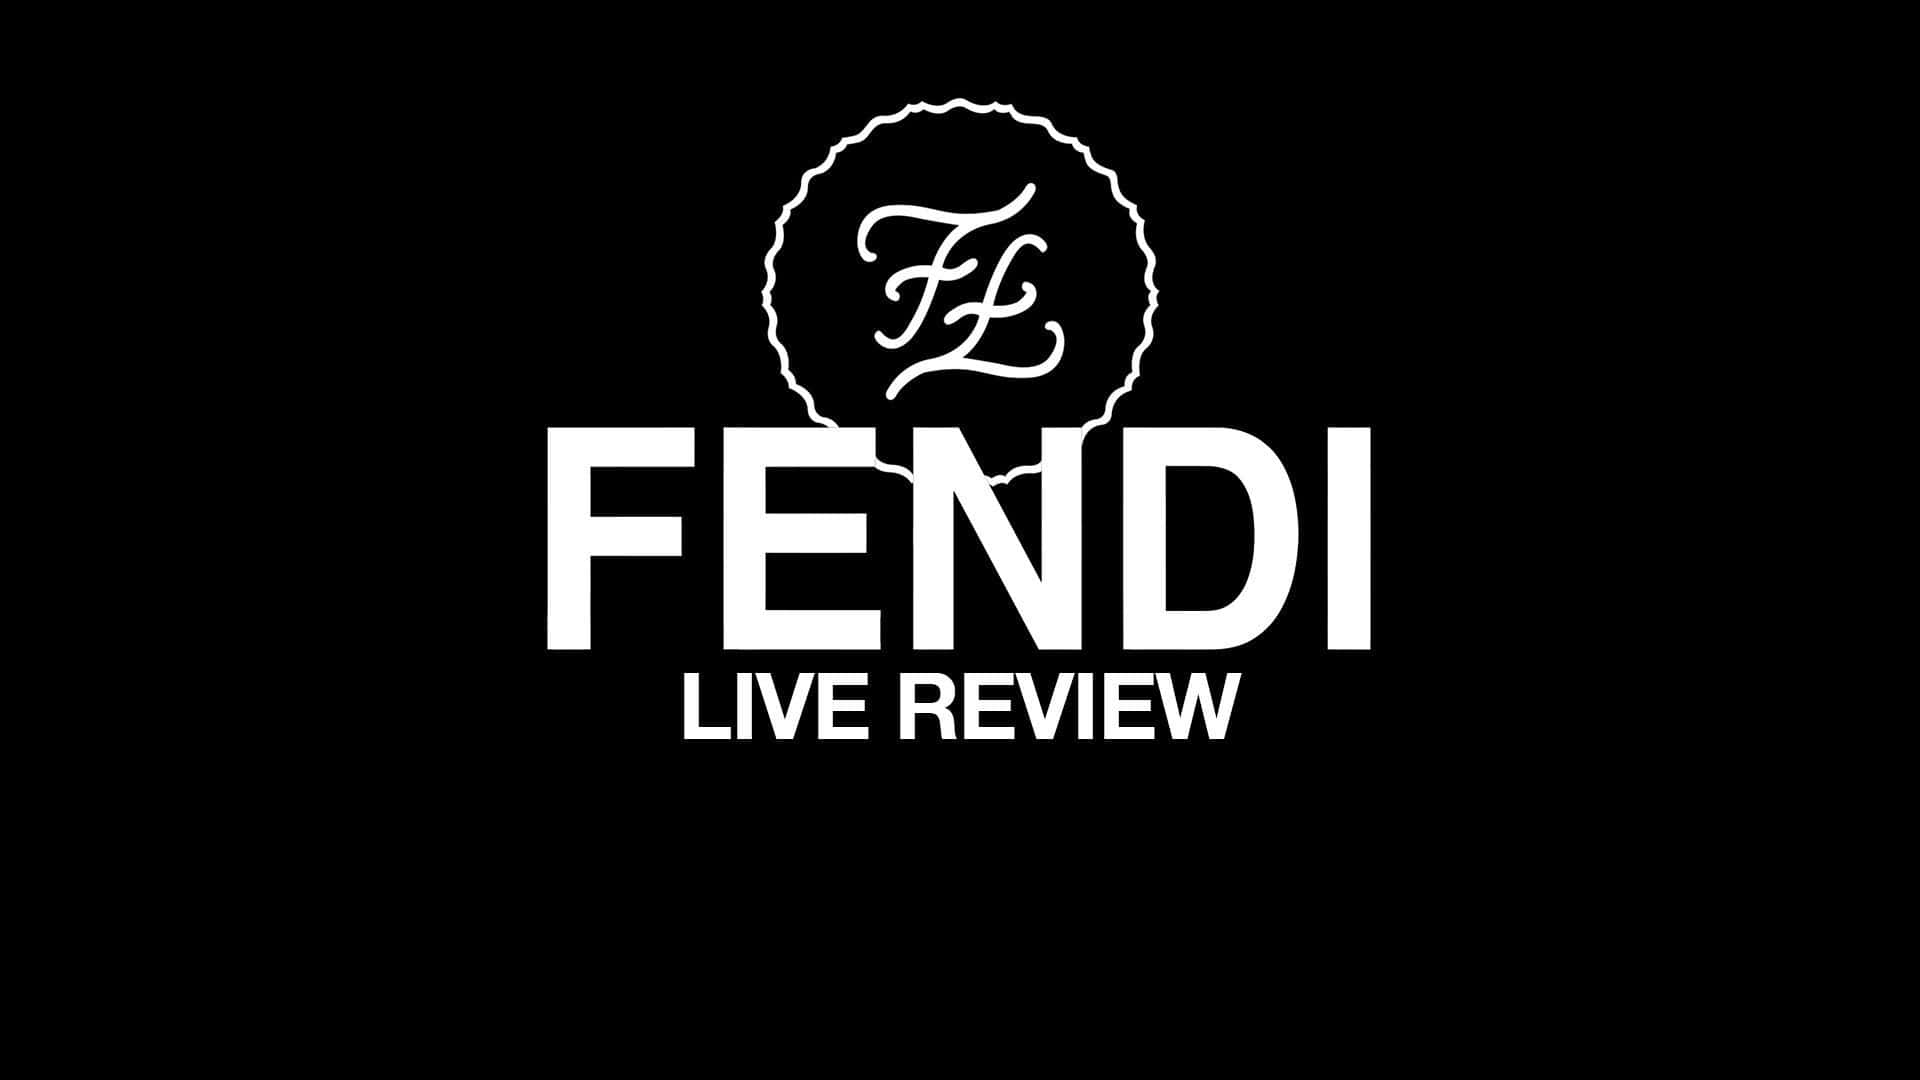 "Fendi: Captivating luxury fashion for the modern woman"